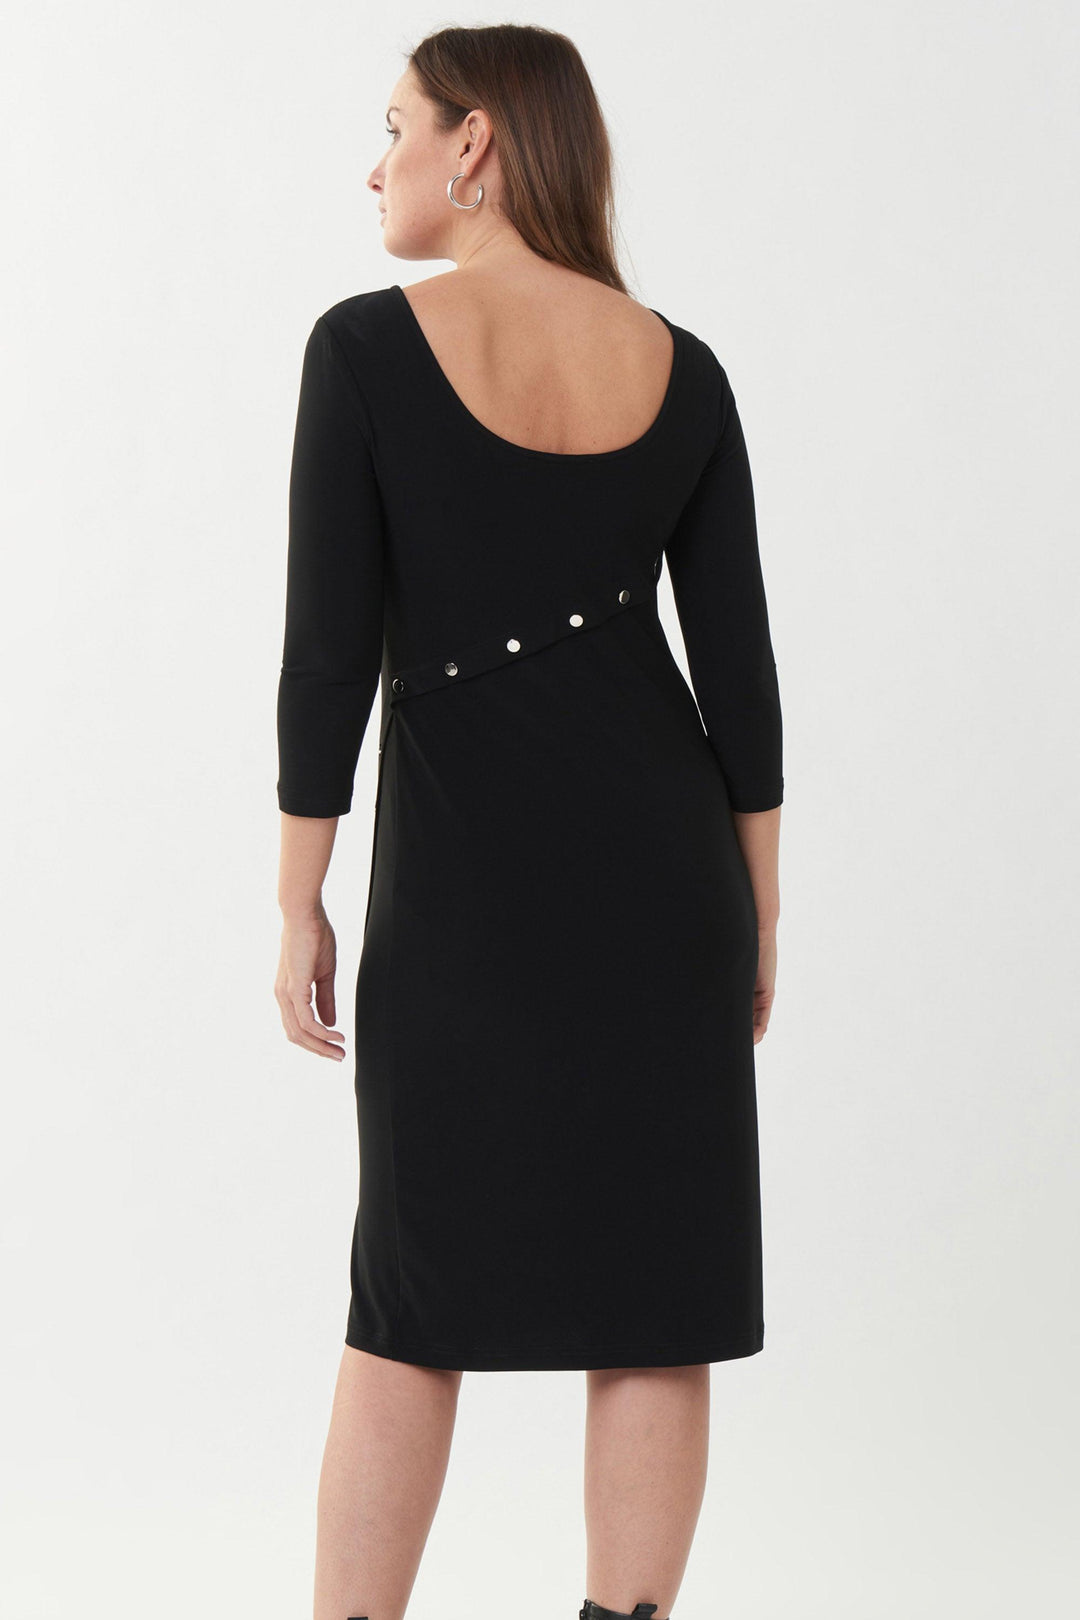 Joseph Ribkoff Black Dress Style 223173 - Dress AW22, Black, Dress, New ginasmartboutique